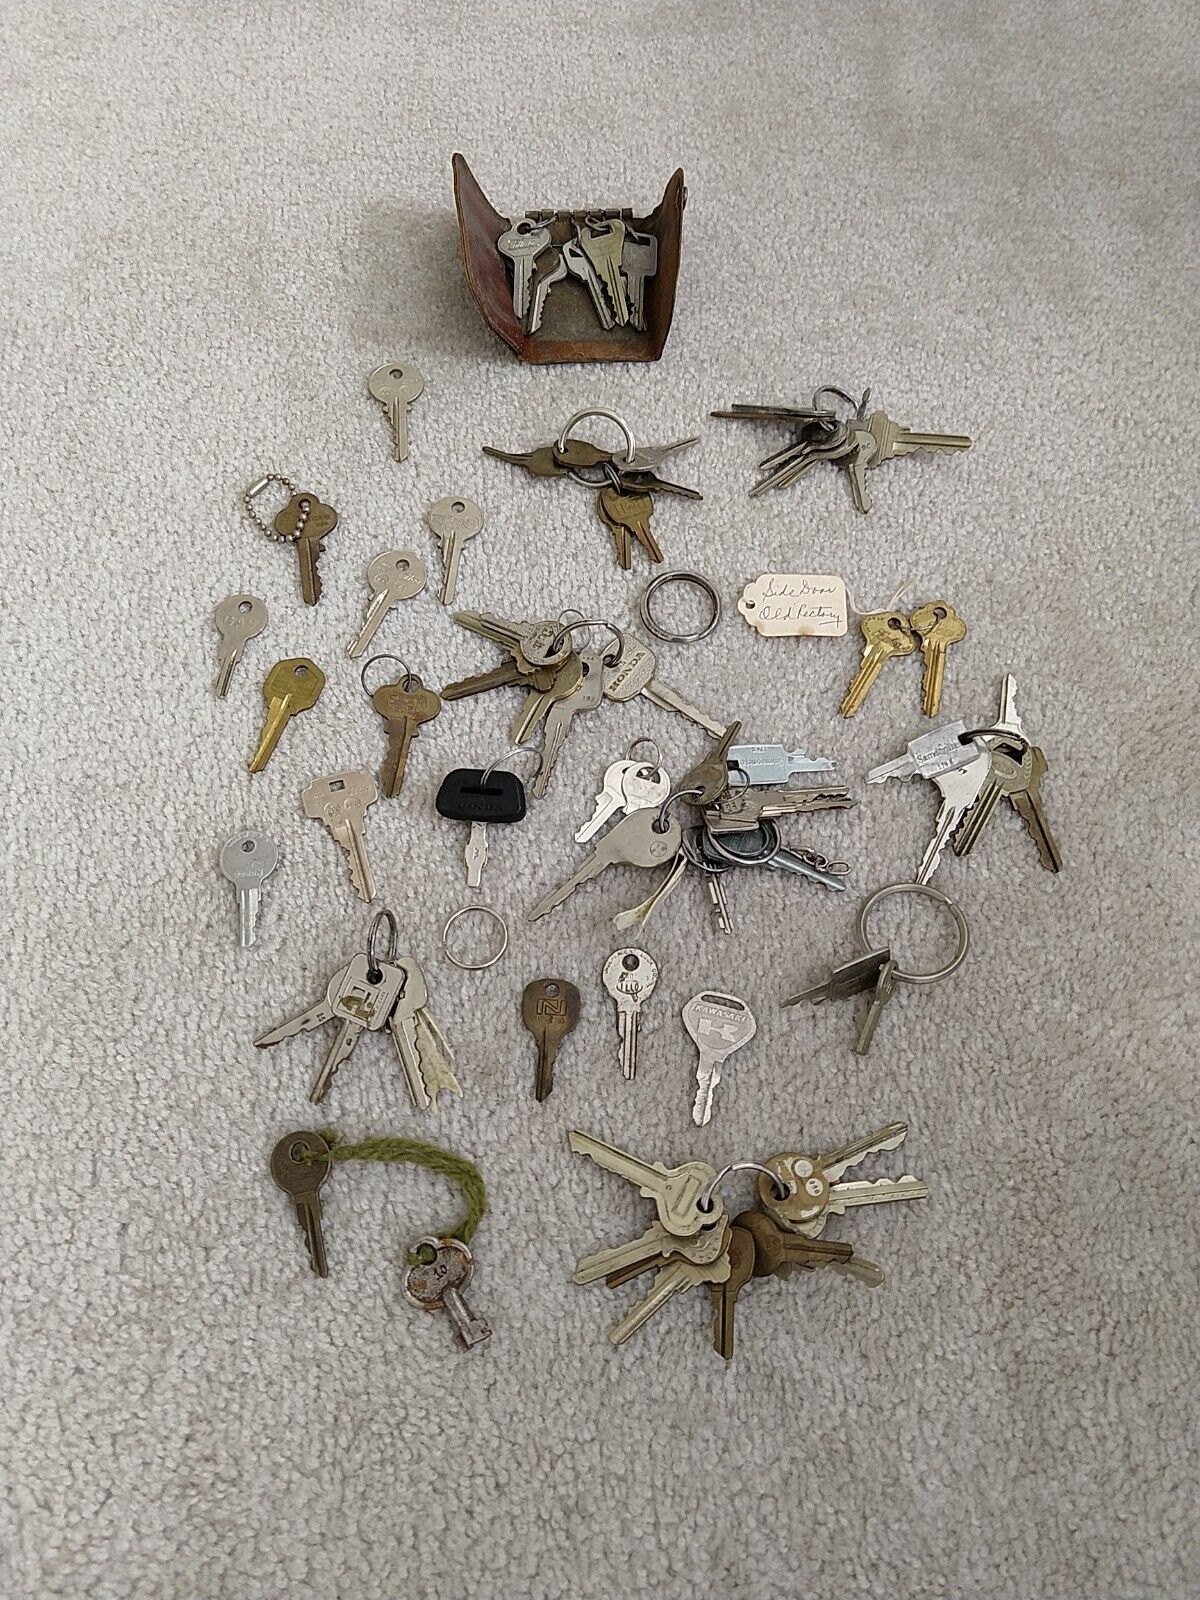 Vintage Key Lot Of 70 Keys Ilco Kawasaki Honda Samsonite Yale Many More